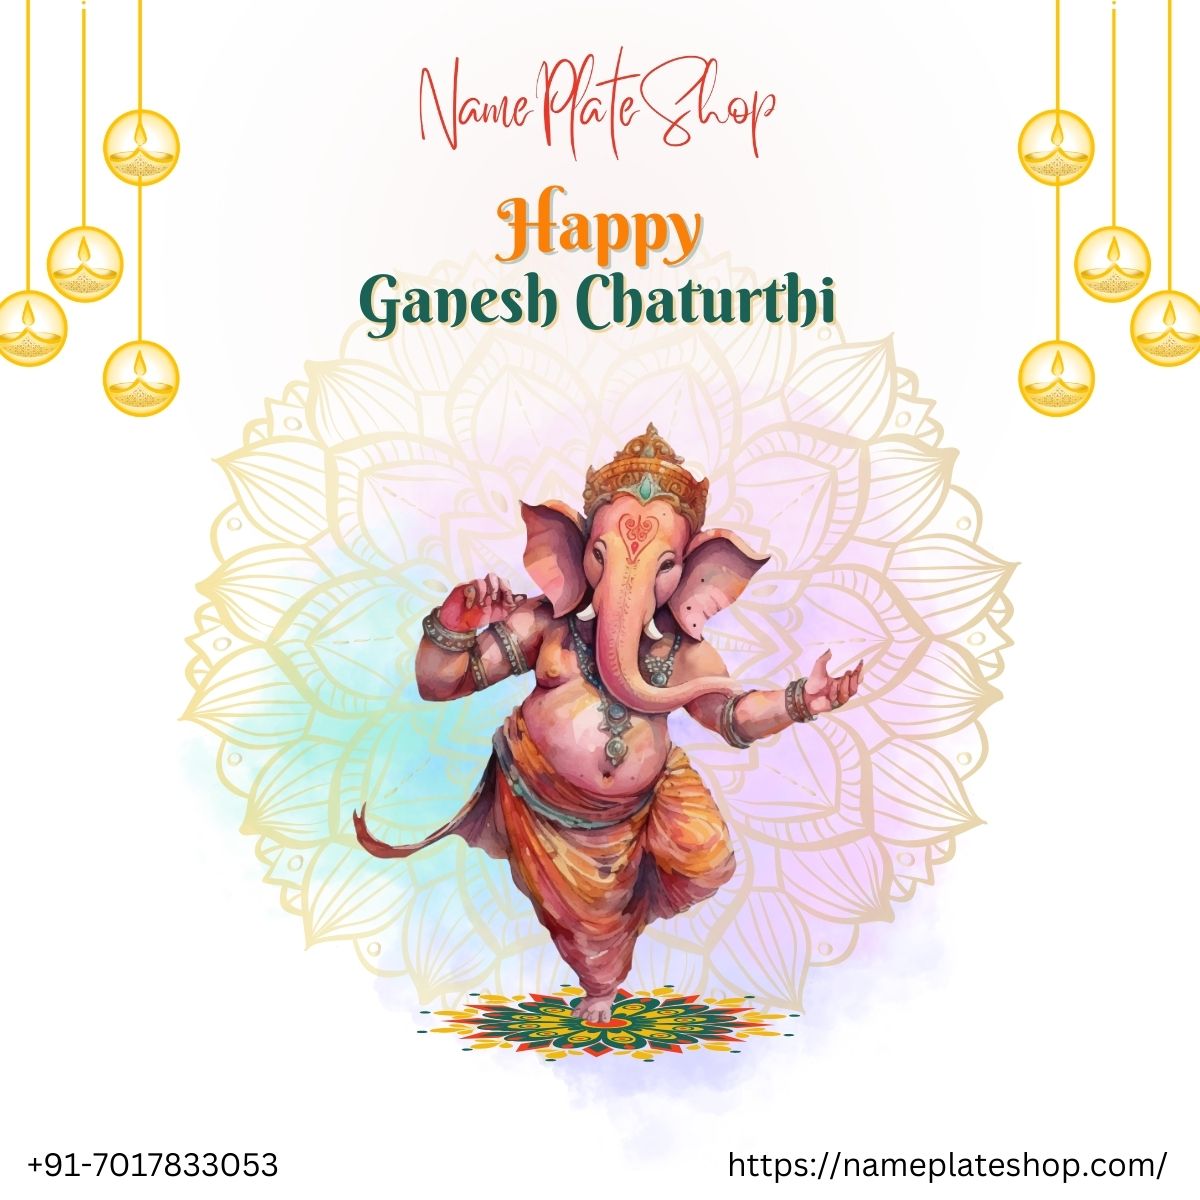 Wishing You a Blessed Ganesh Chaturthi from NameplateShop